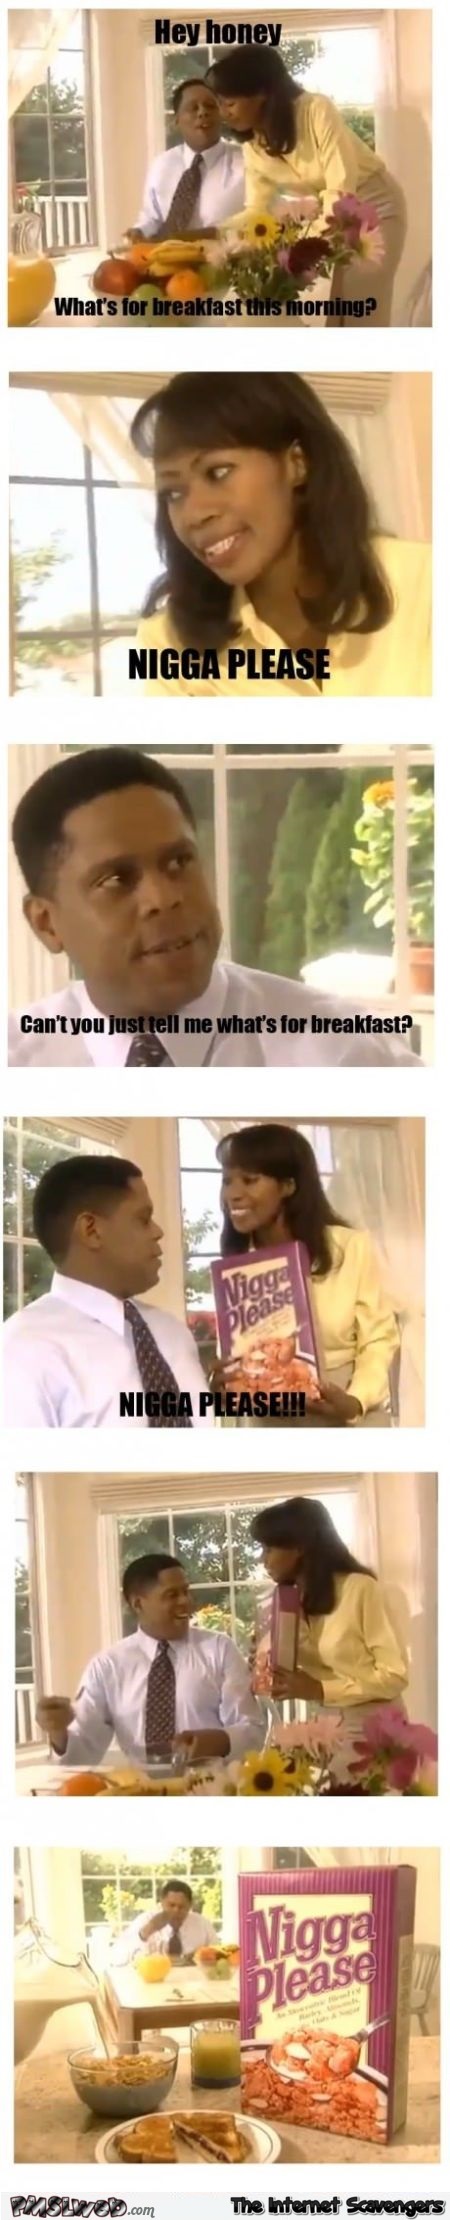 Funny nigga please cereal – Monday hilarity @PMSLweb.com